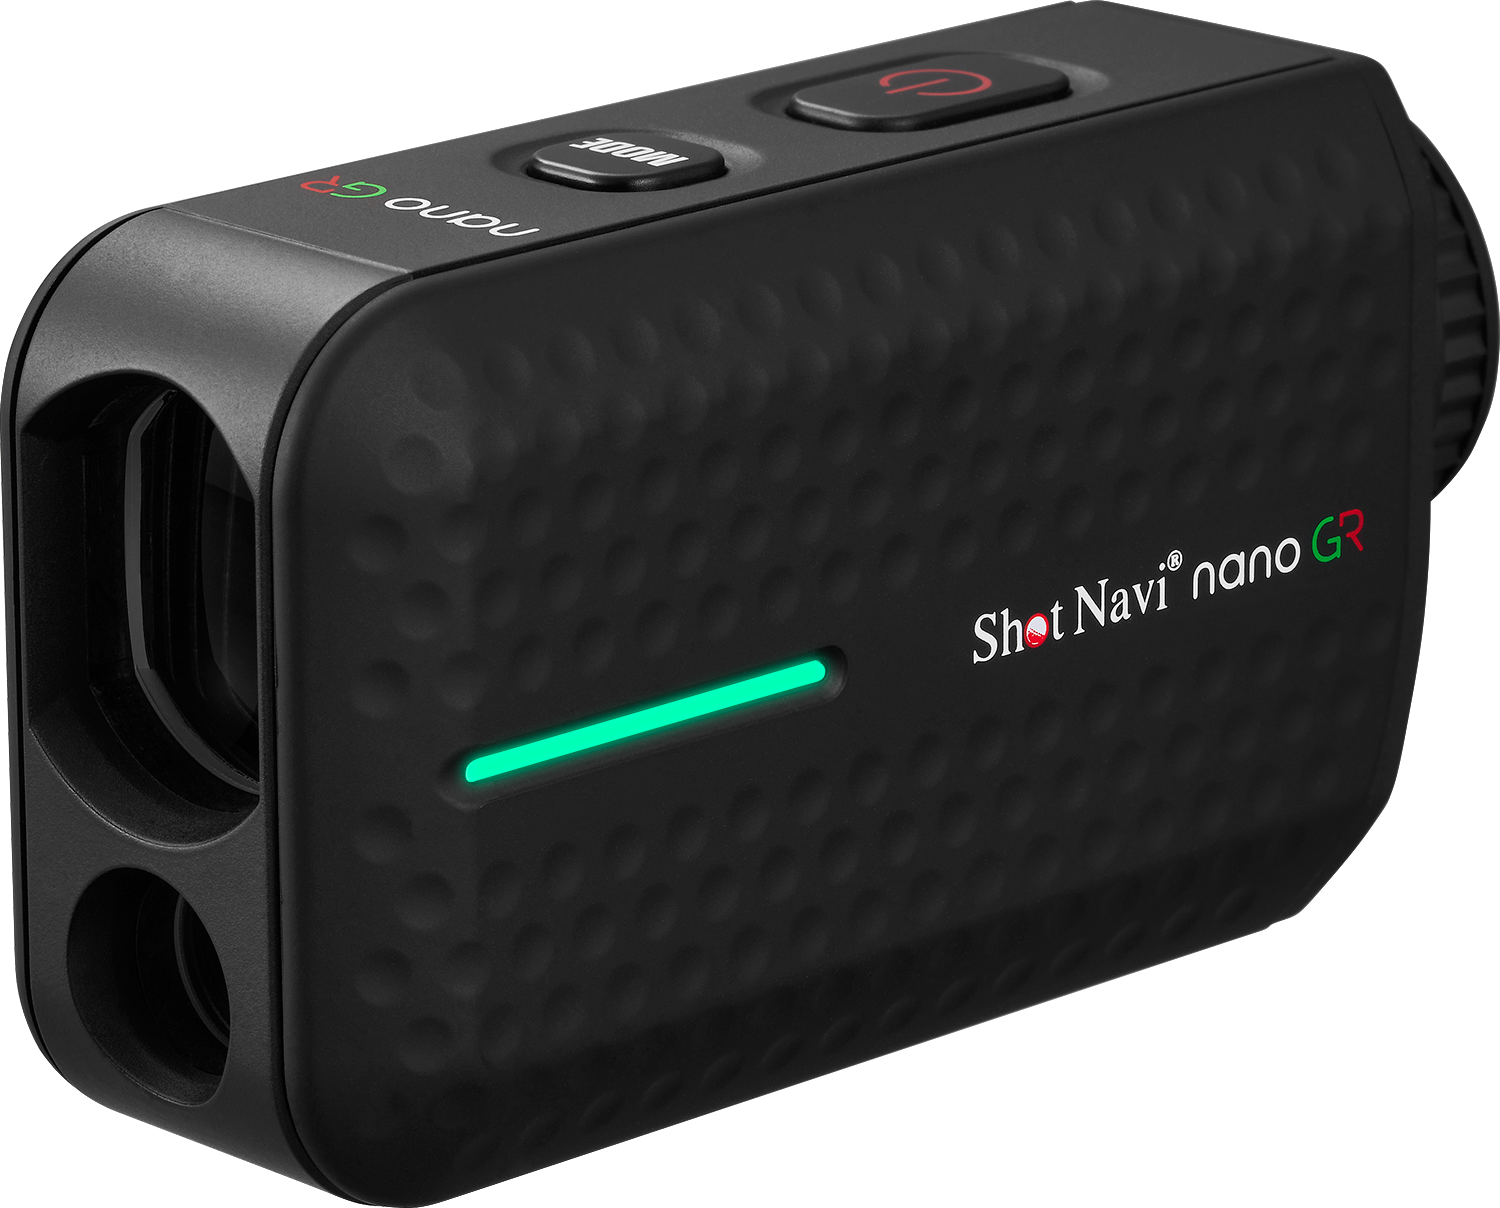 Shot Naviより、超小型・超軽量で緑・赤OLEDを搭載した
レーザー距離計測器Shot Navi 
Laser Sniper nano GRを5/1発売